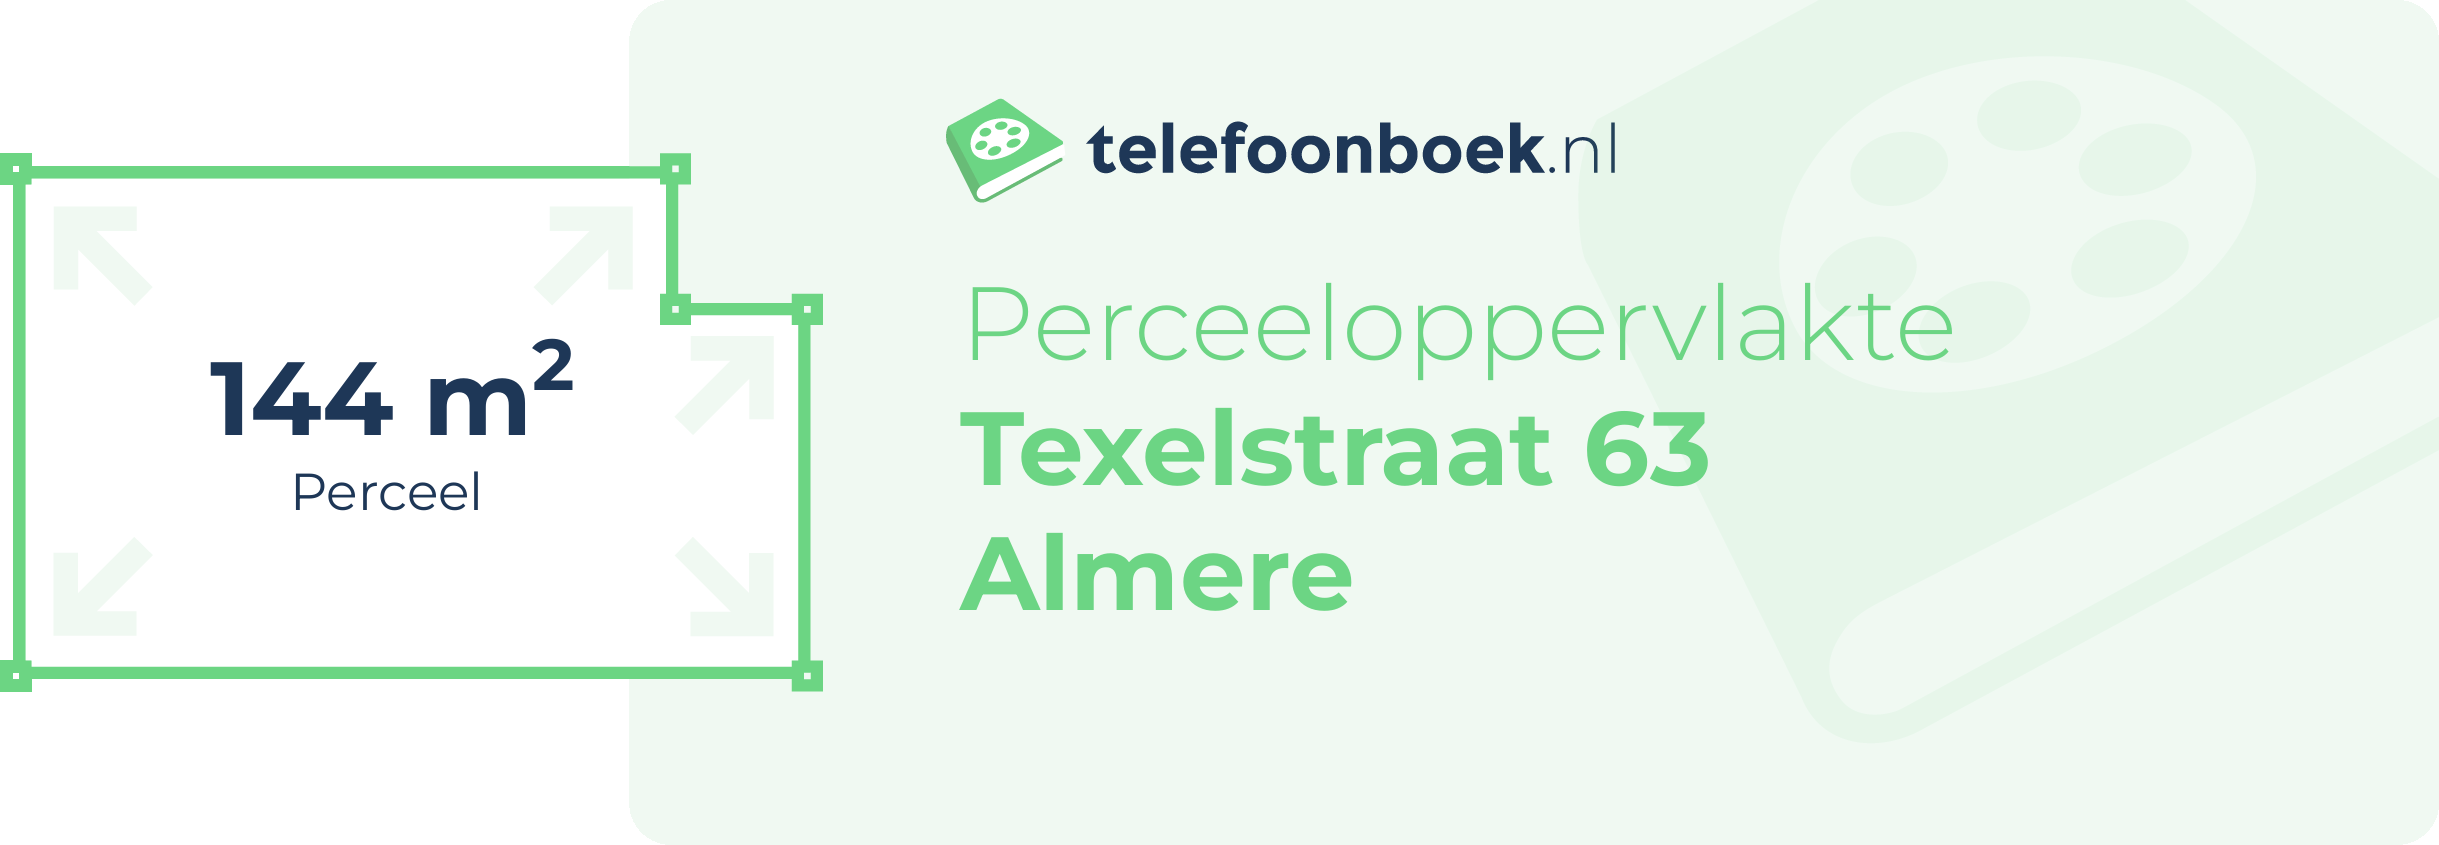 Perceeloppervlakte Texelstraat 63 Almere